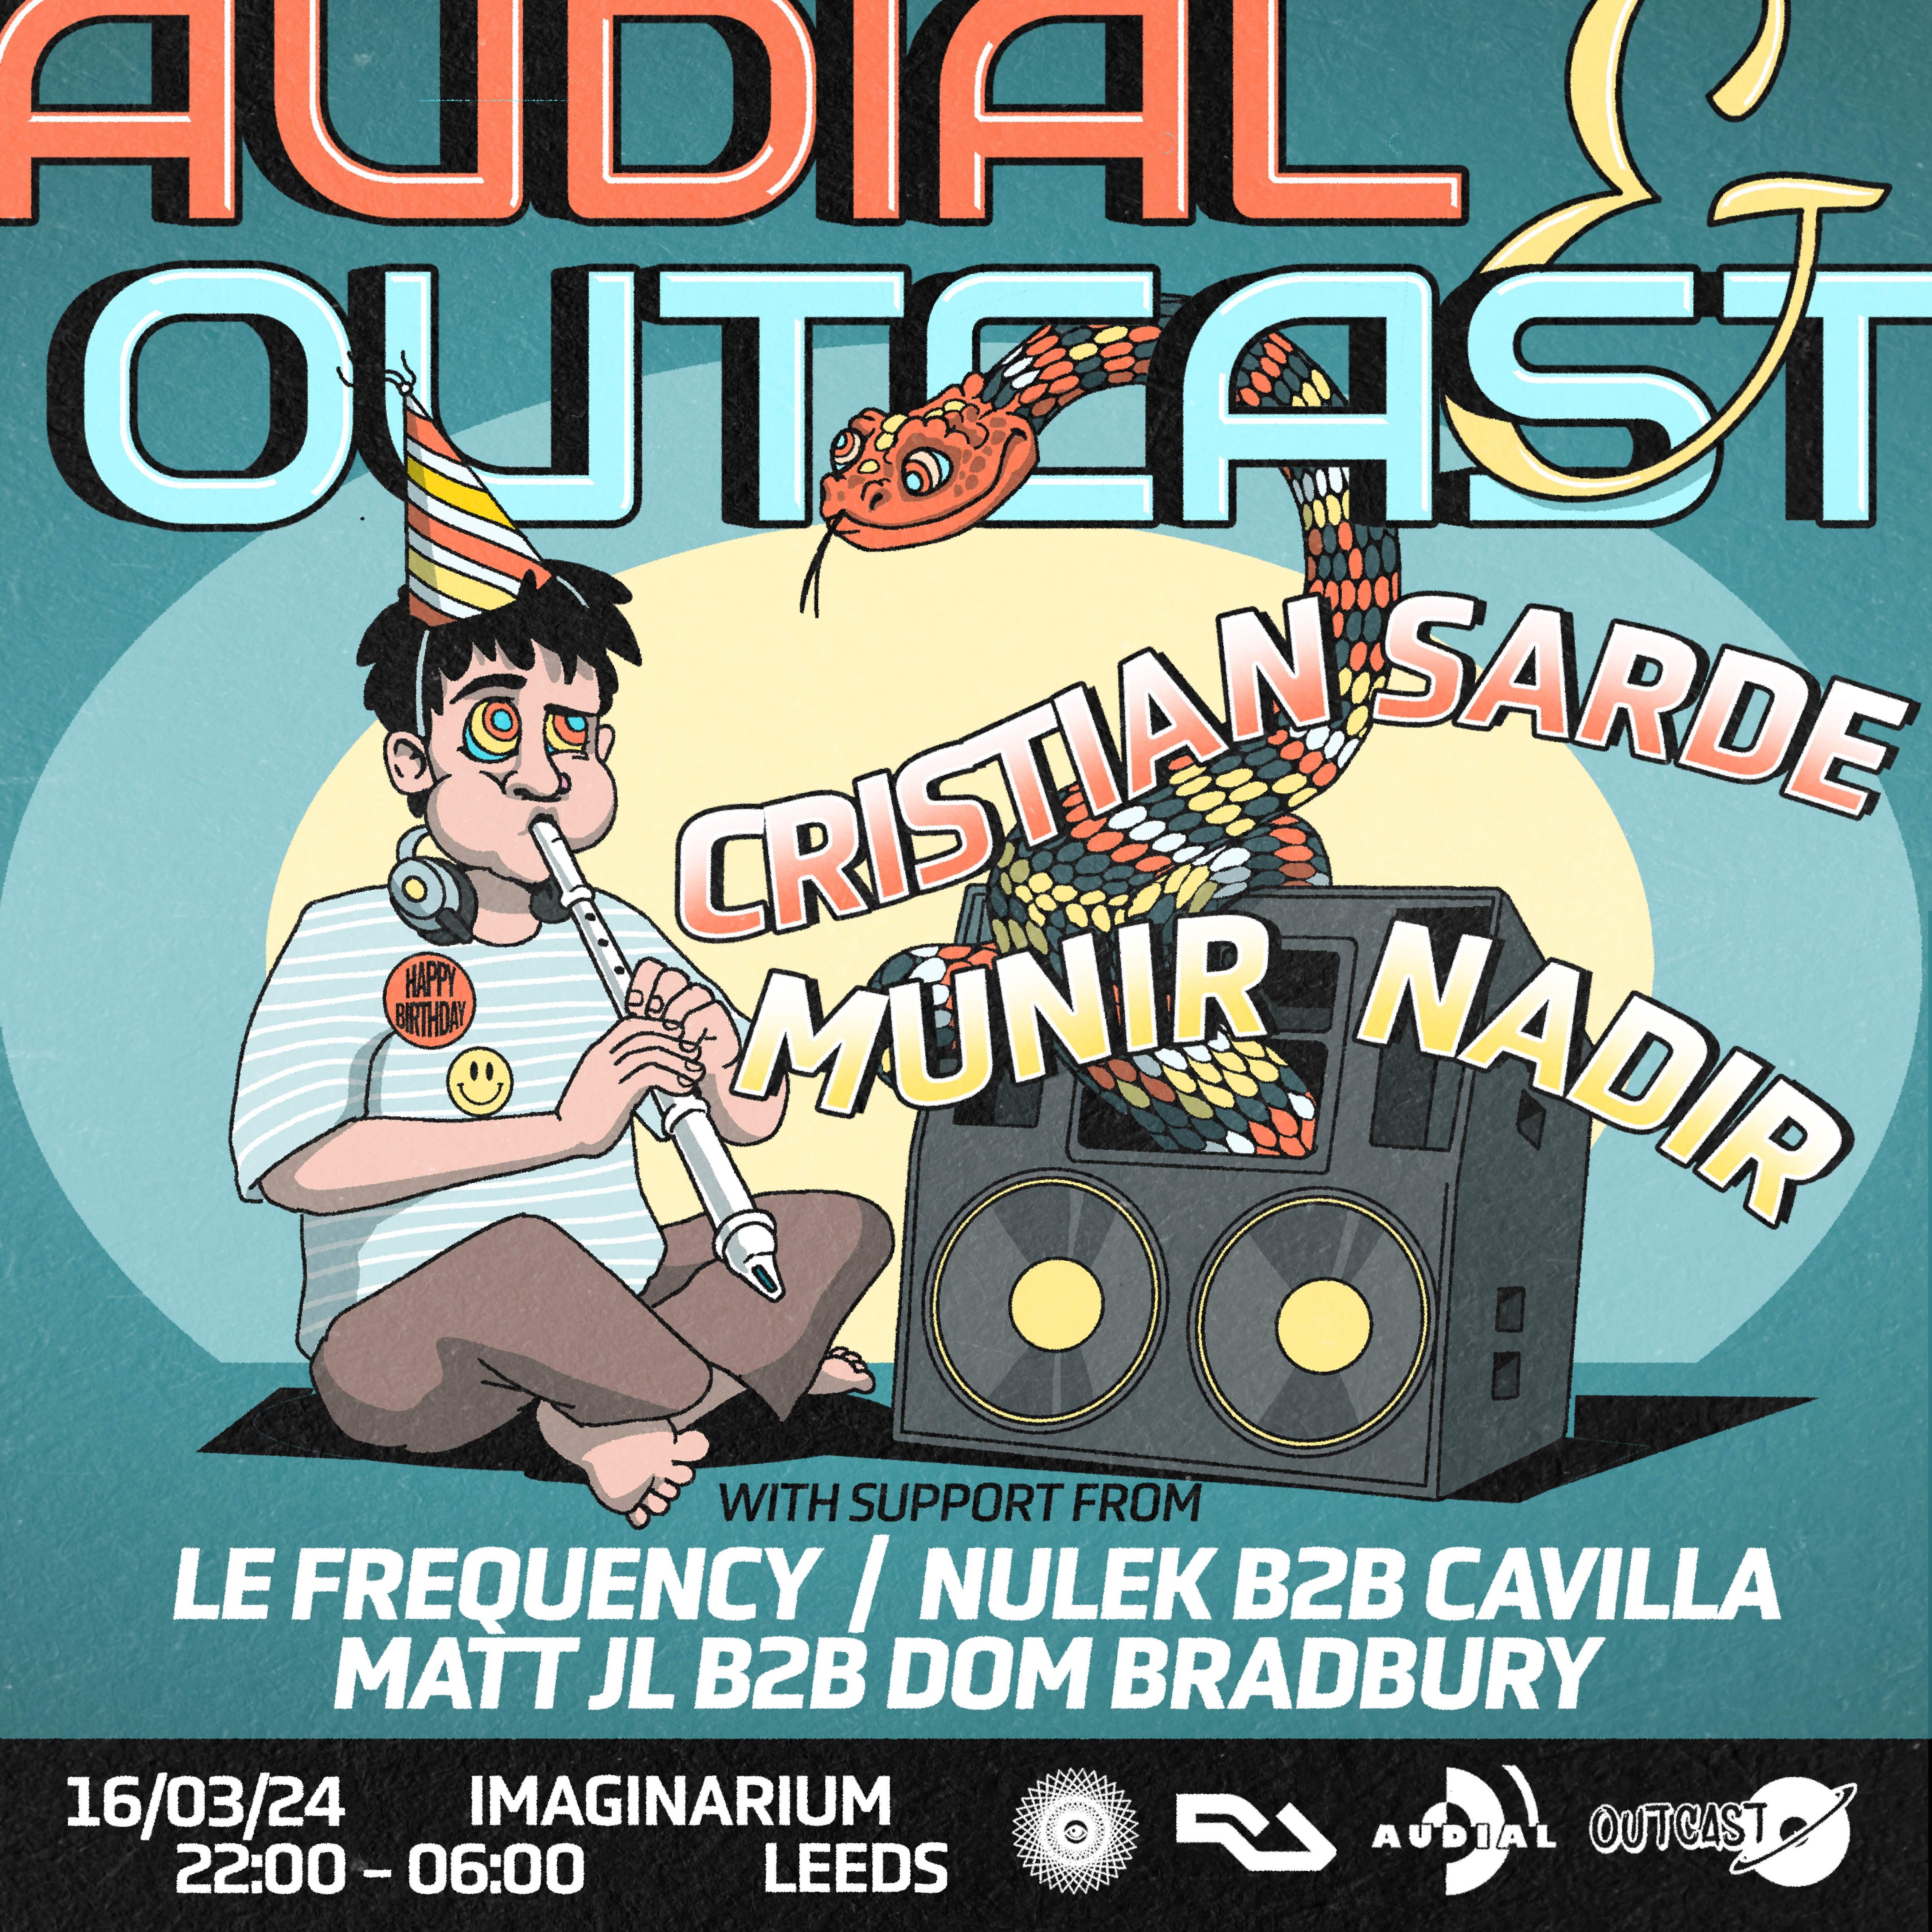 Audial x Outcast Torino presents Cristian Sarde & Munir Nadir - フライヤー表